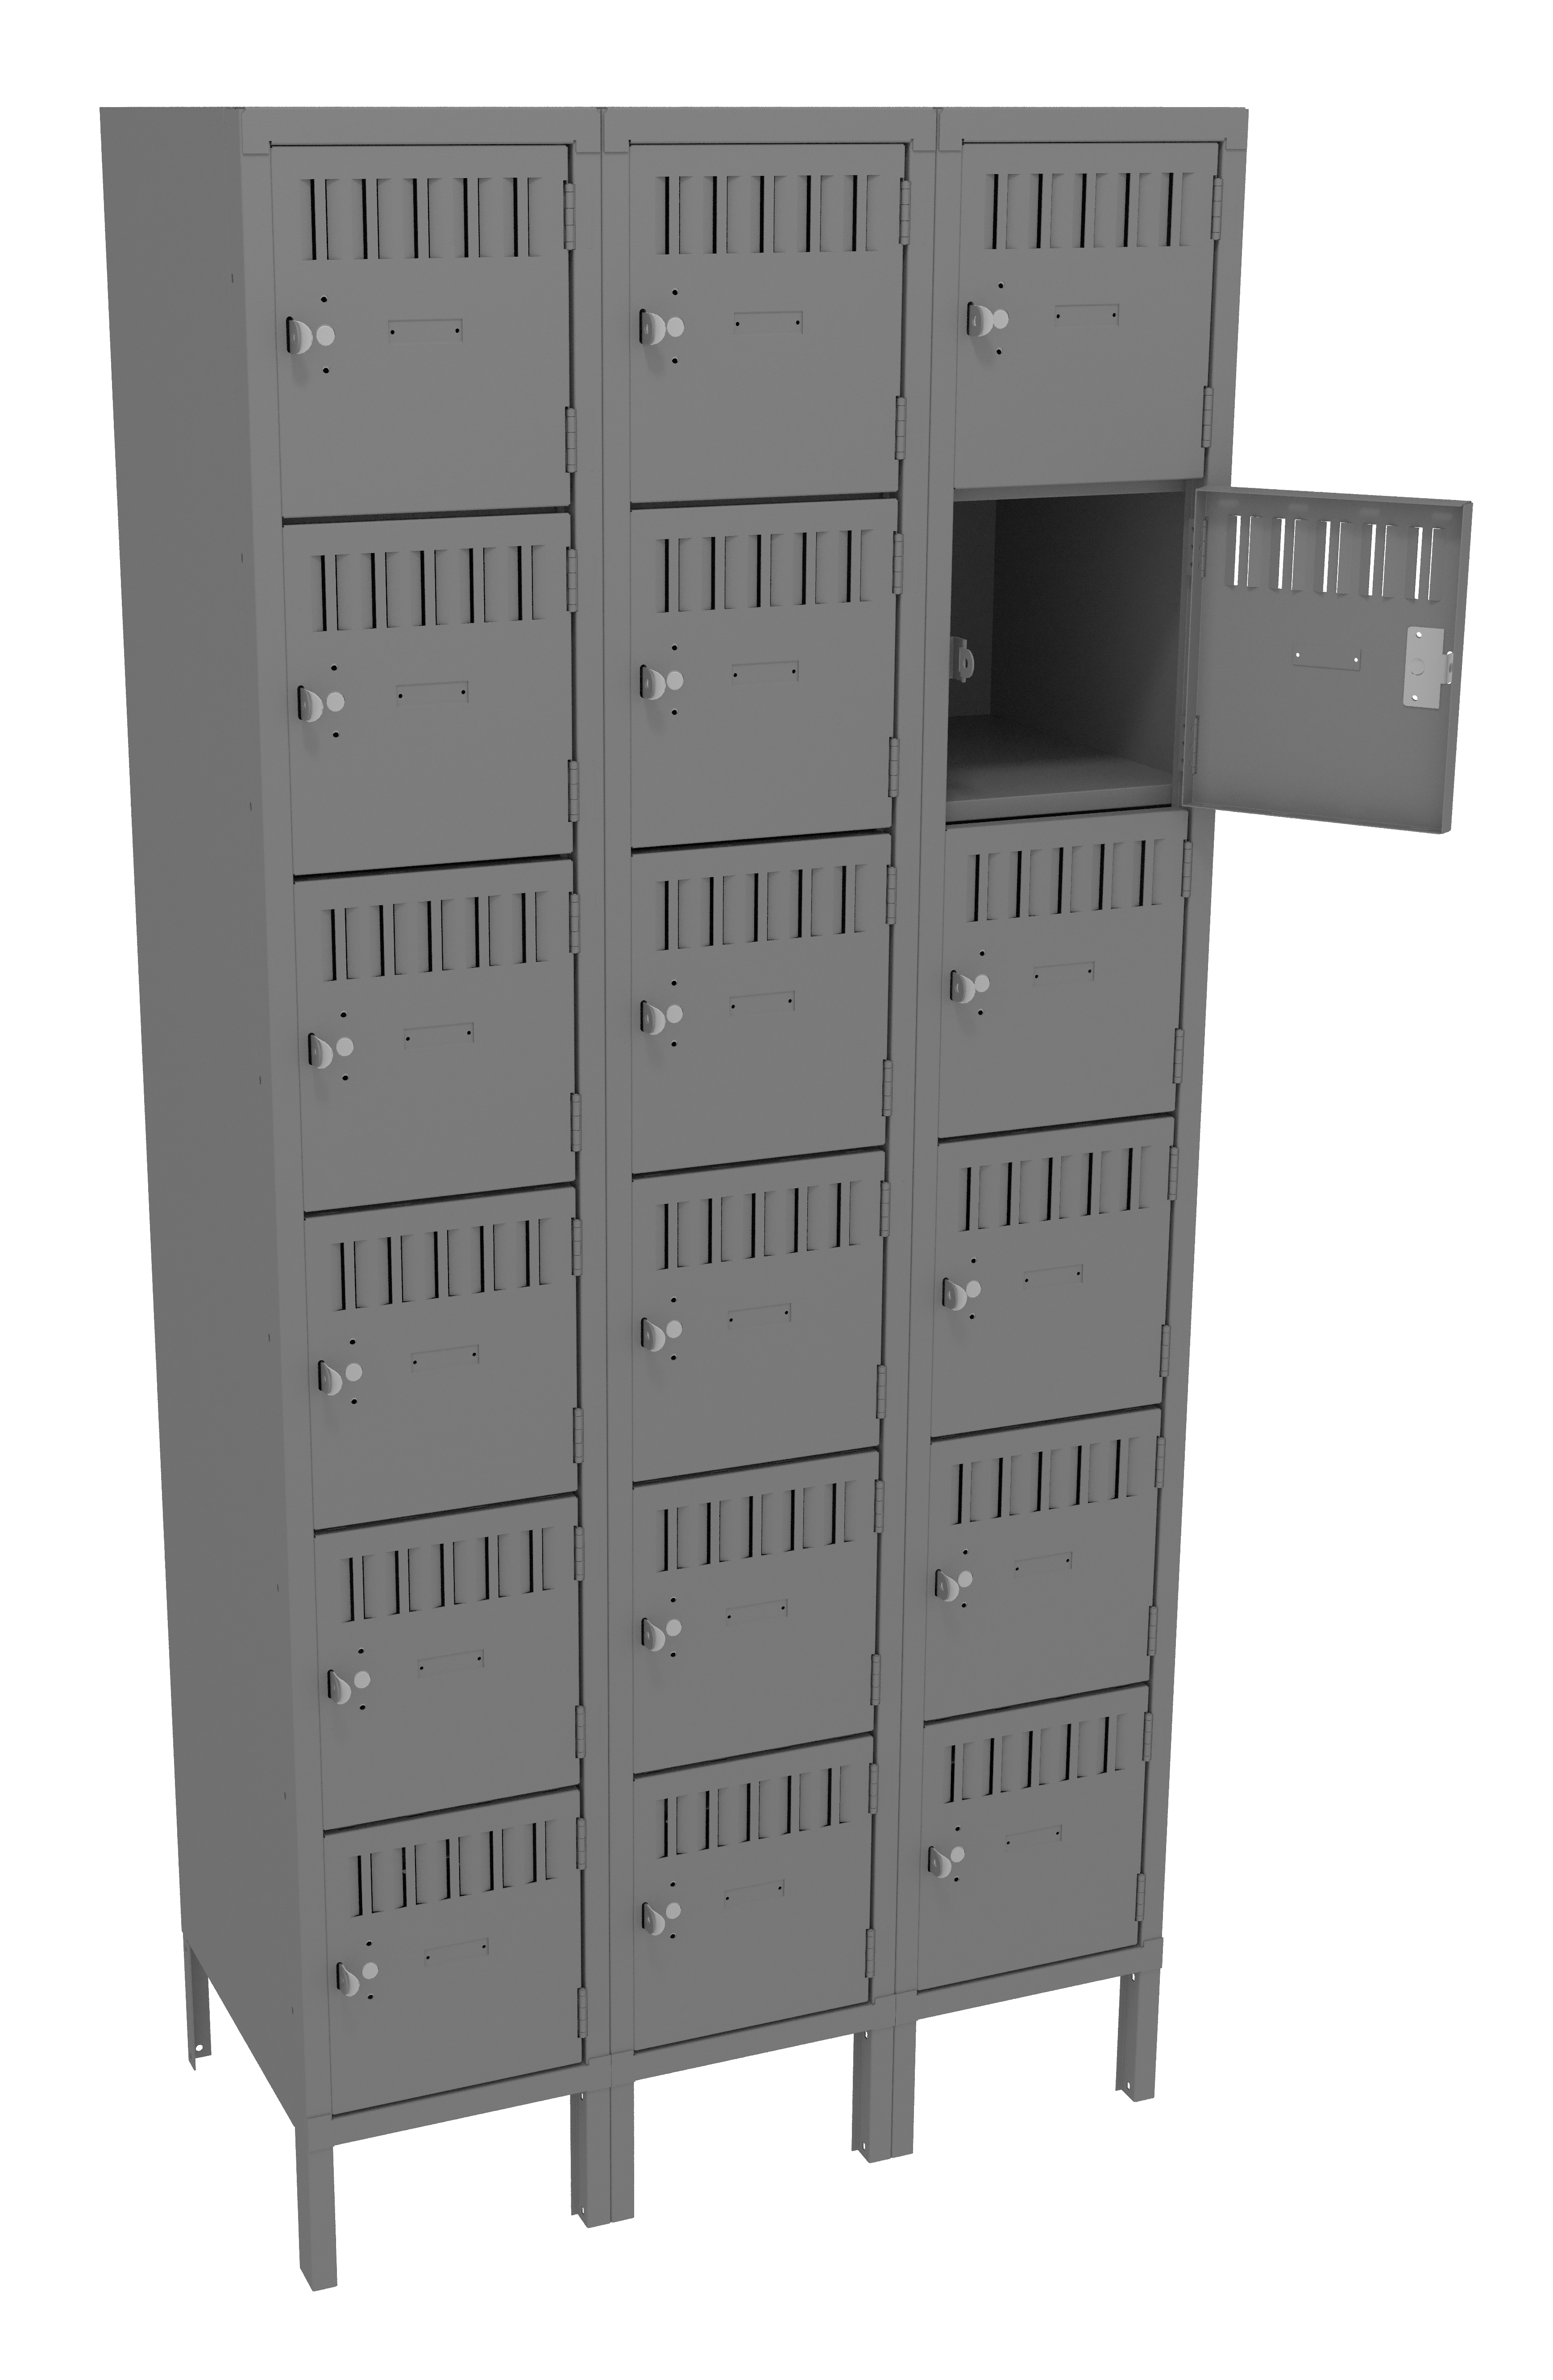 Tennsco Box Compartments With Legs, Triple Stack, 36w X 18d X 78h, Medium Gray BS6-121812-3-MGY, Tennsco Box Compartments With Legs, Triple Stack, 36w X 18d X 78h, Medium Gray